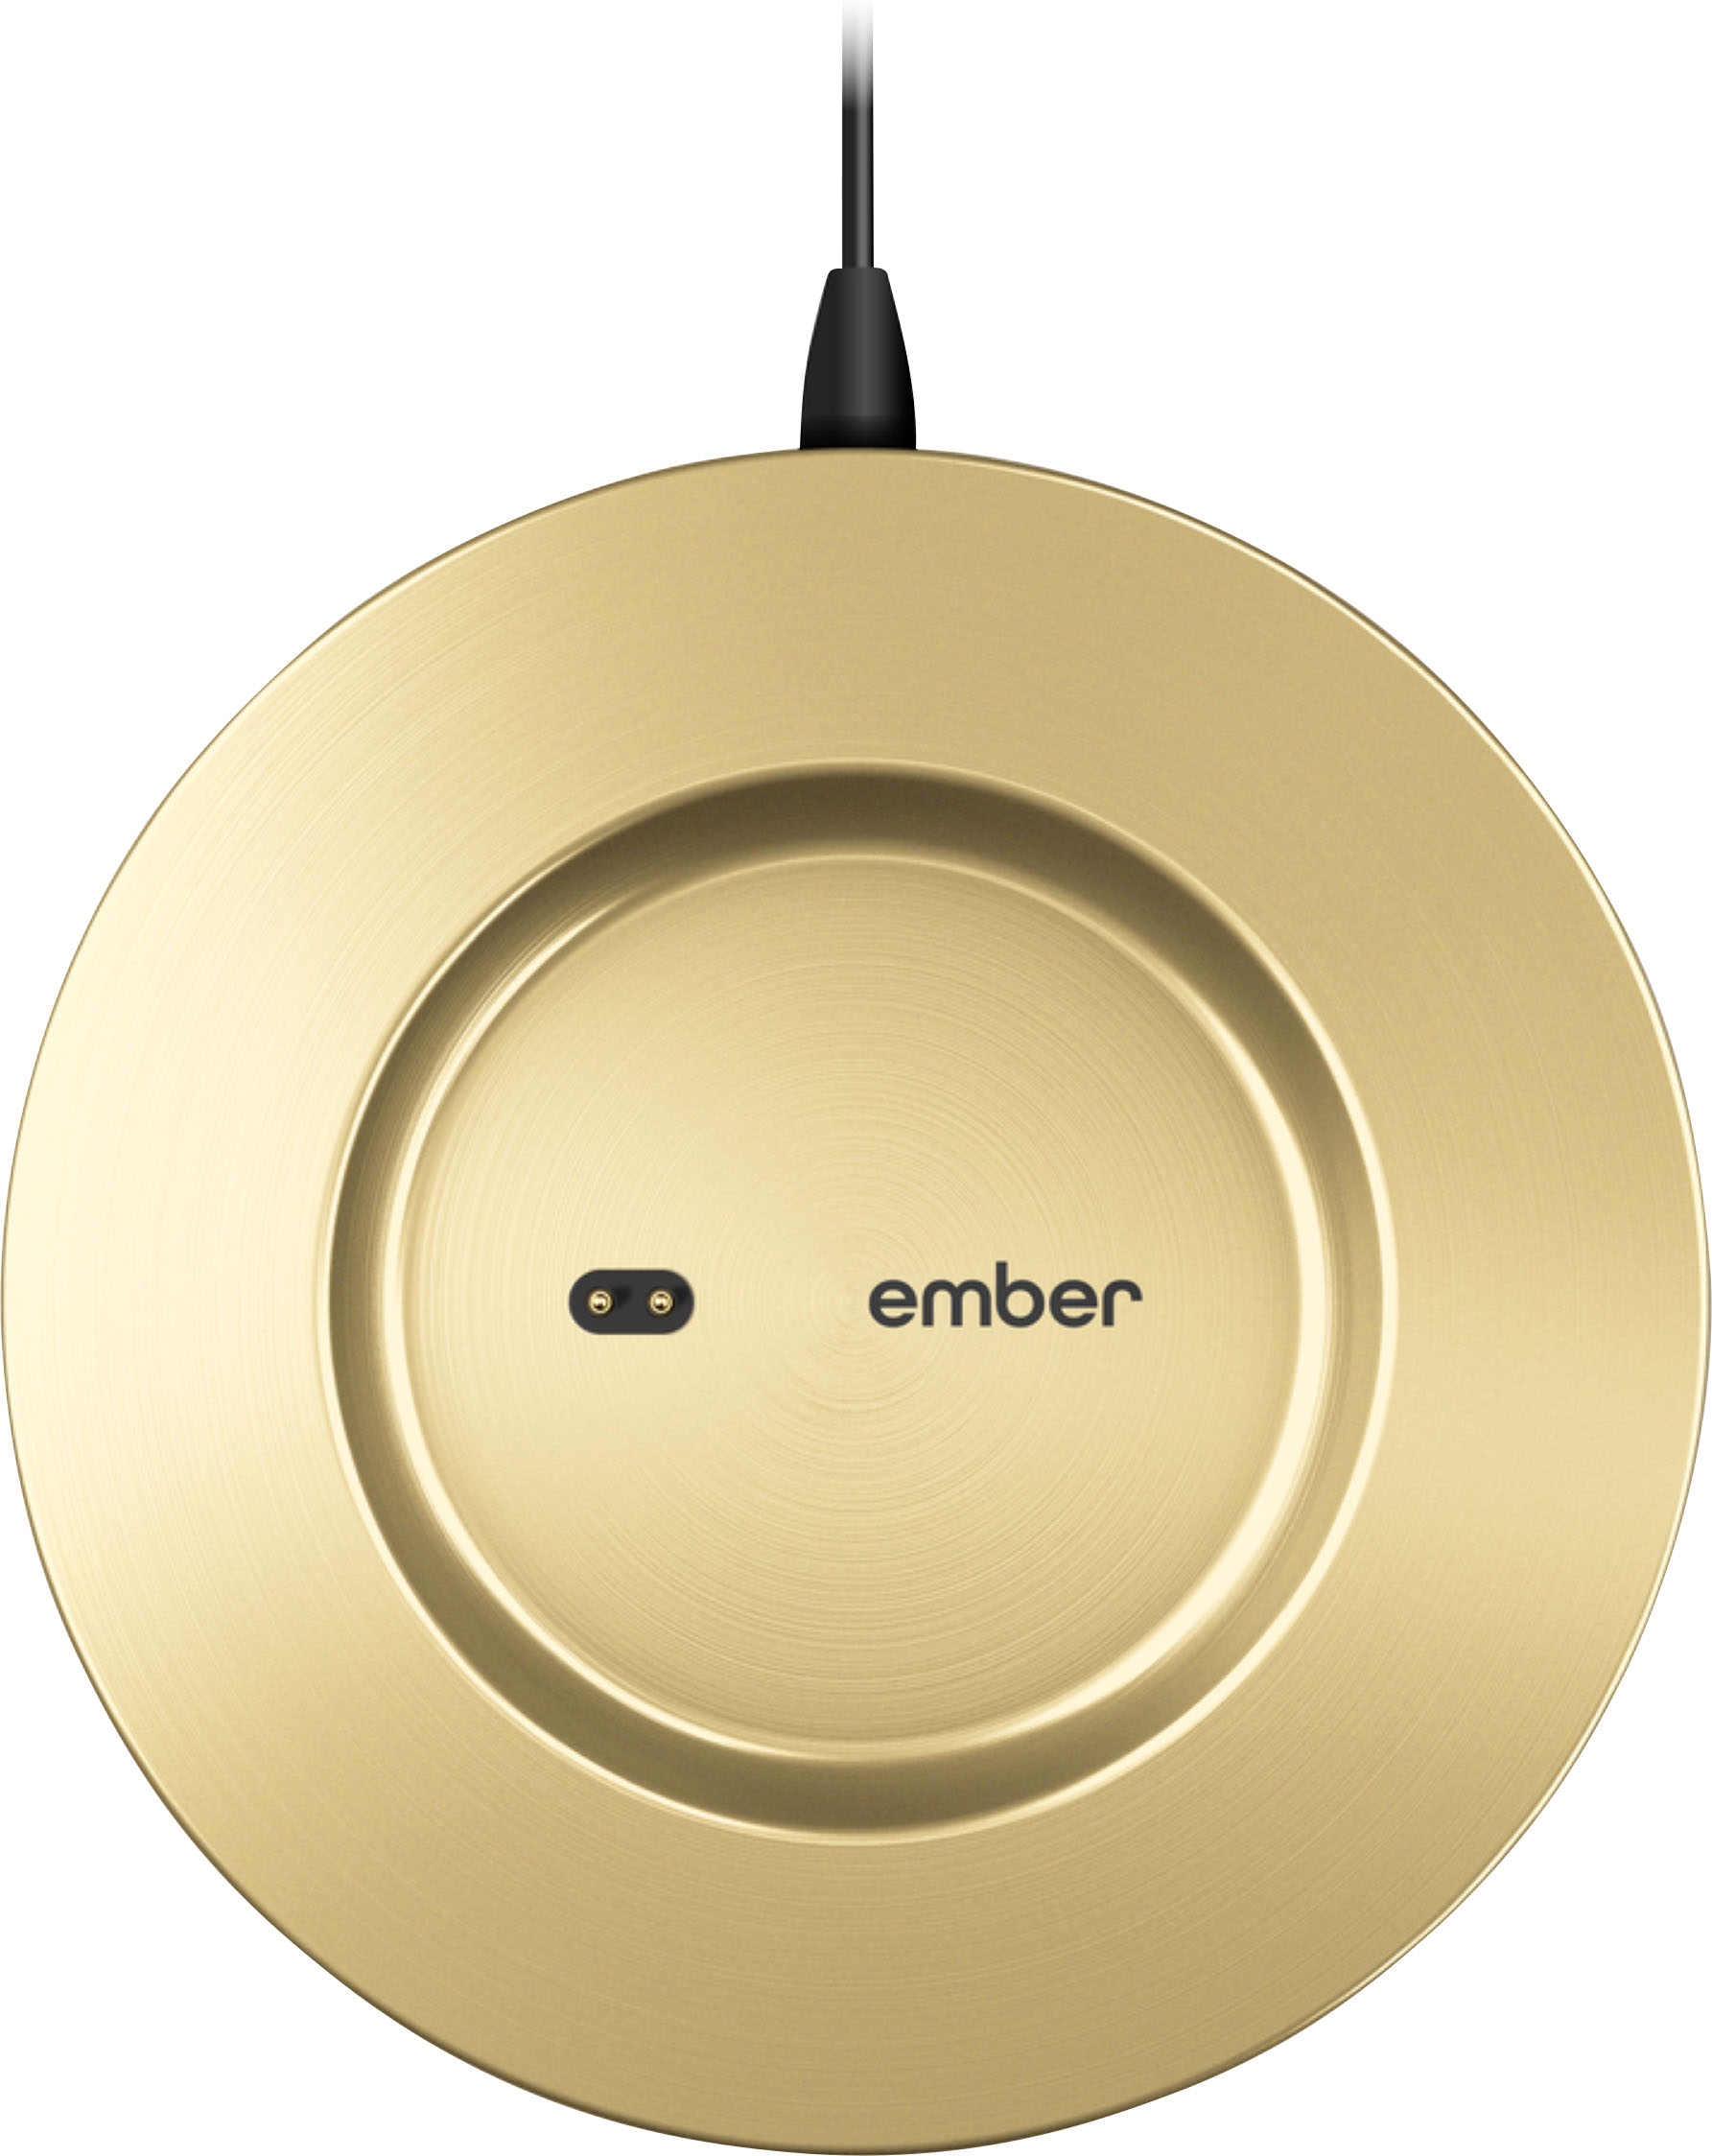 Extra Charging Coaster 2: Ember Travel Mug 2 - Ember®